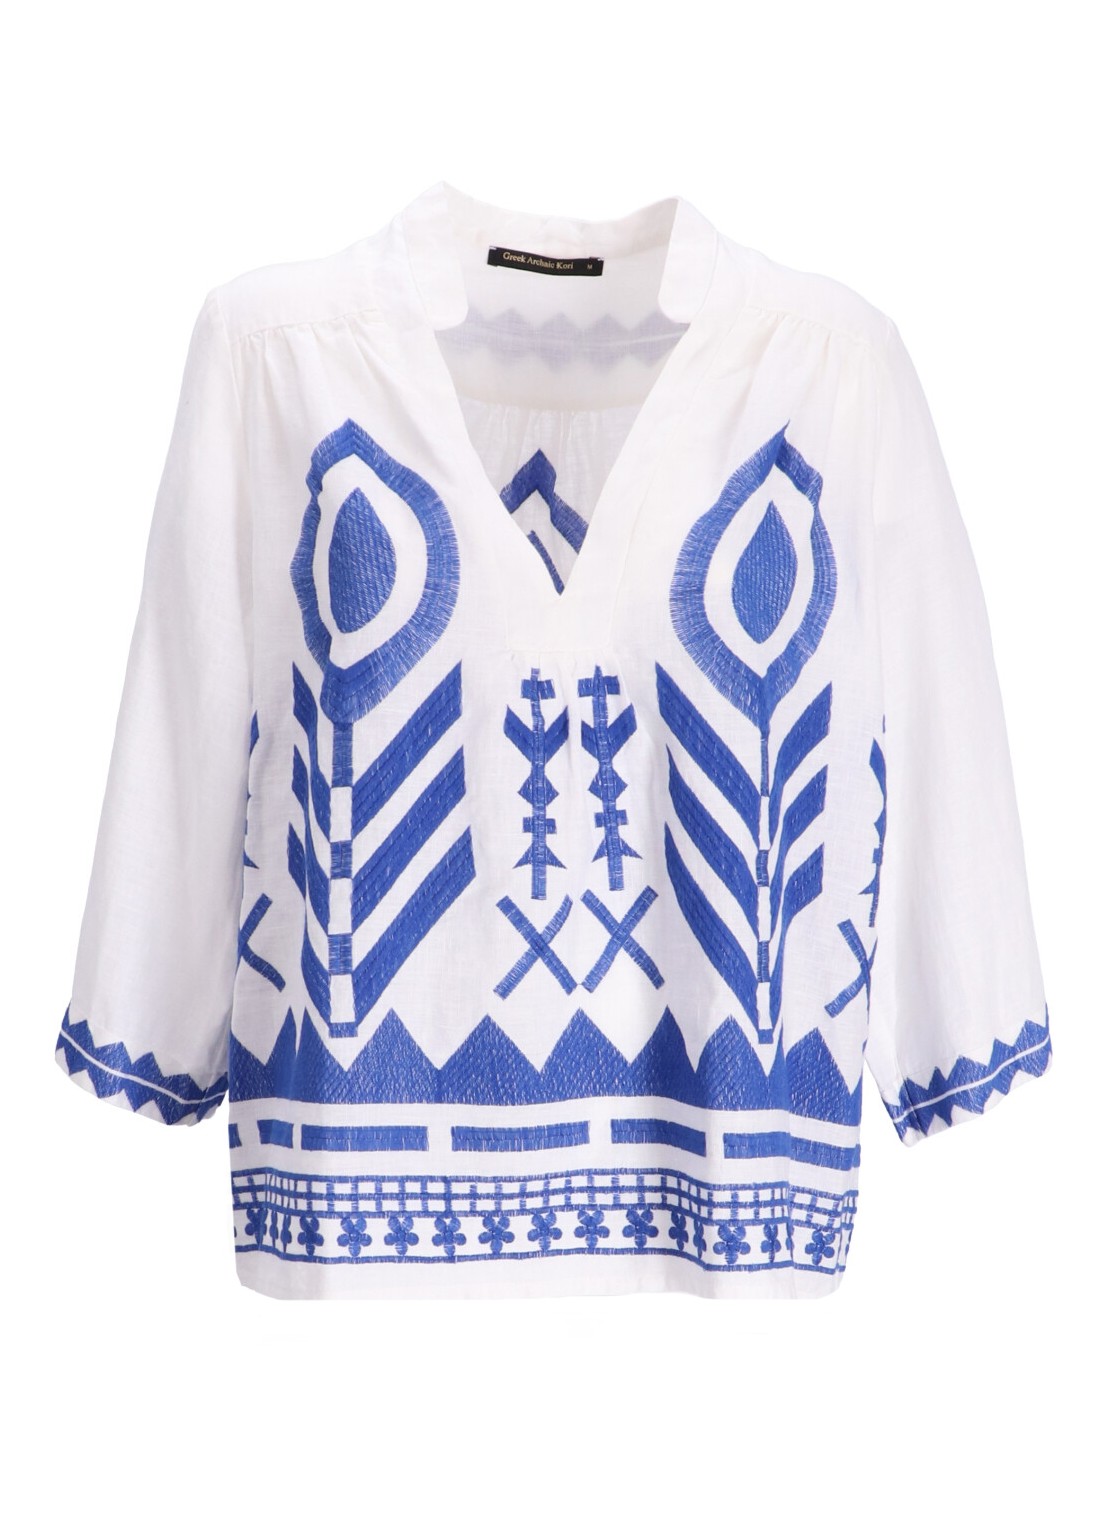 Blusa greek archaic kori t-shirt woman blouse feather 3/4 sleeve s24k240126 115 talla L
 